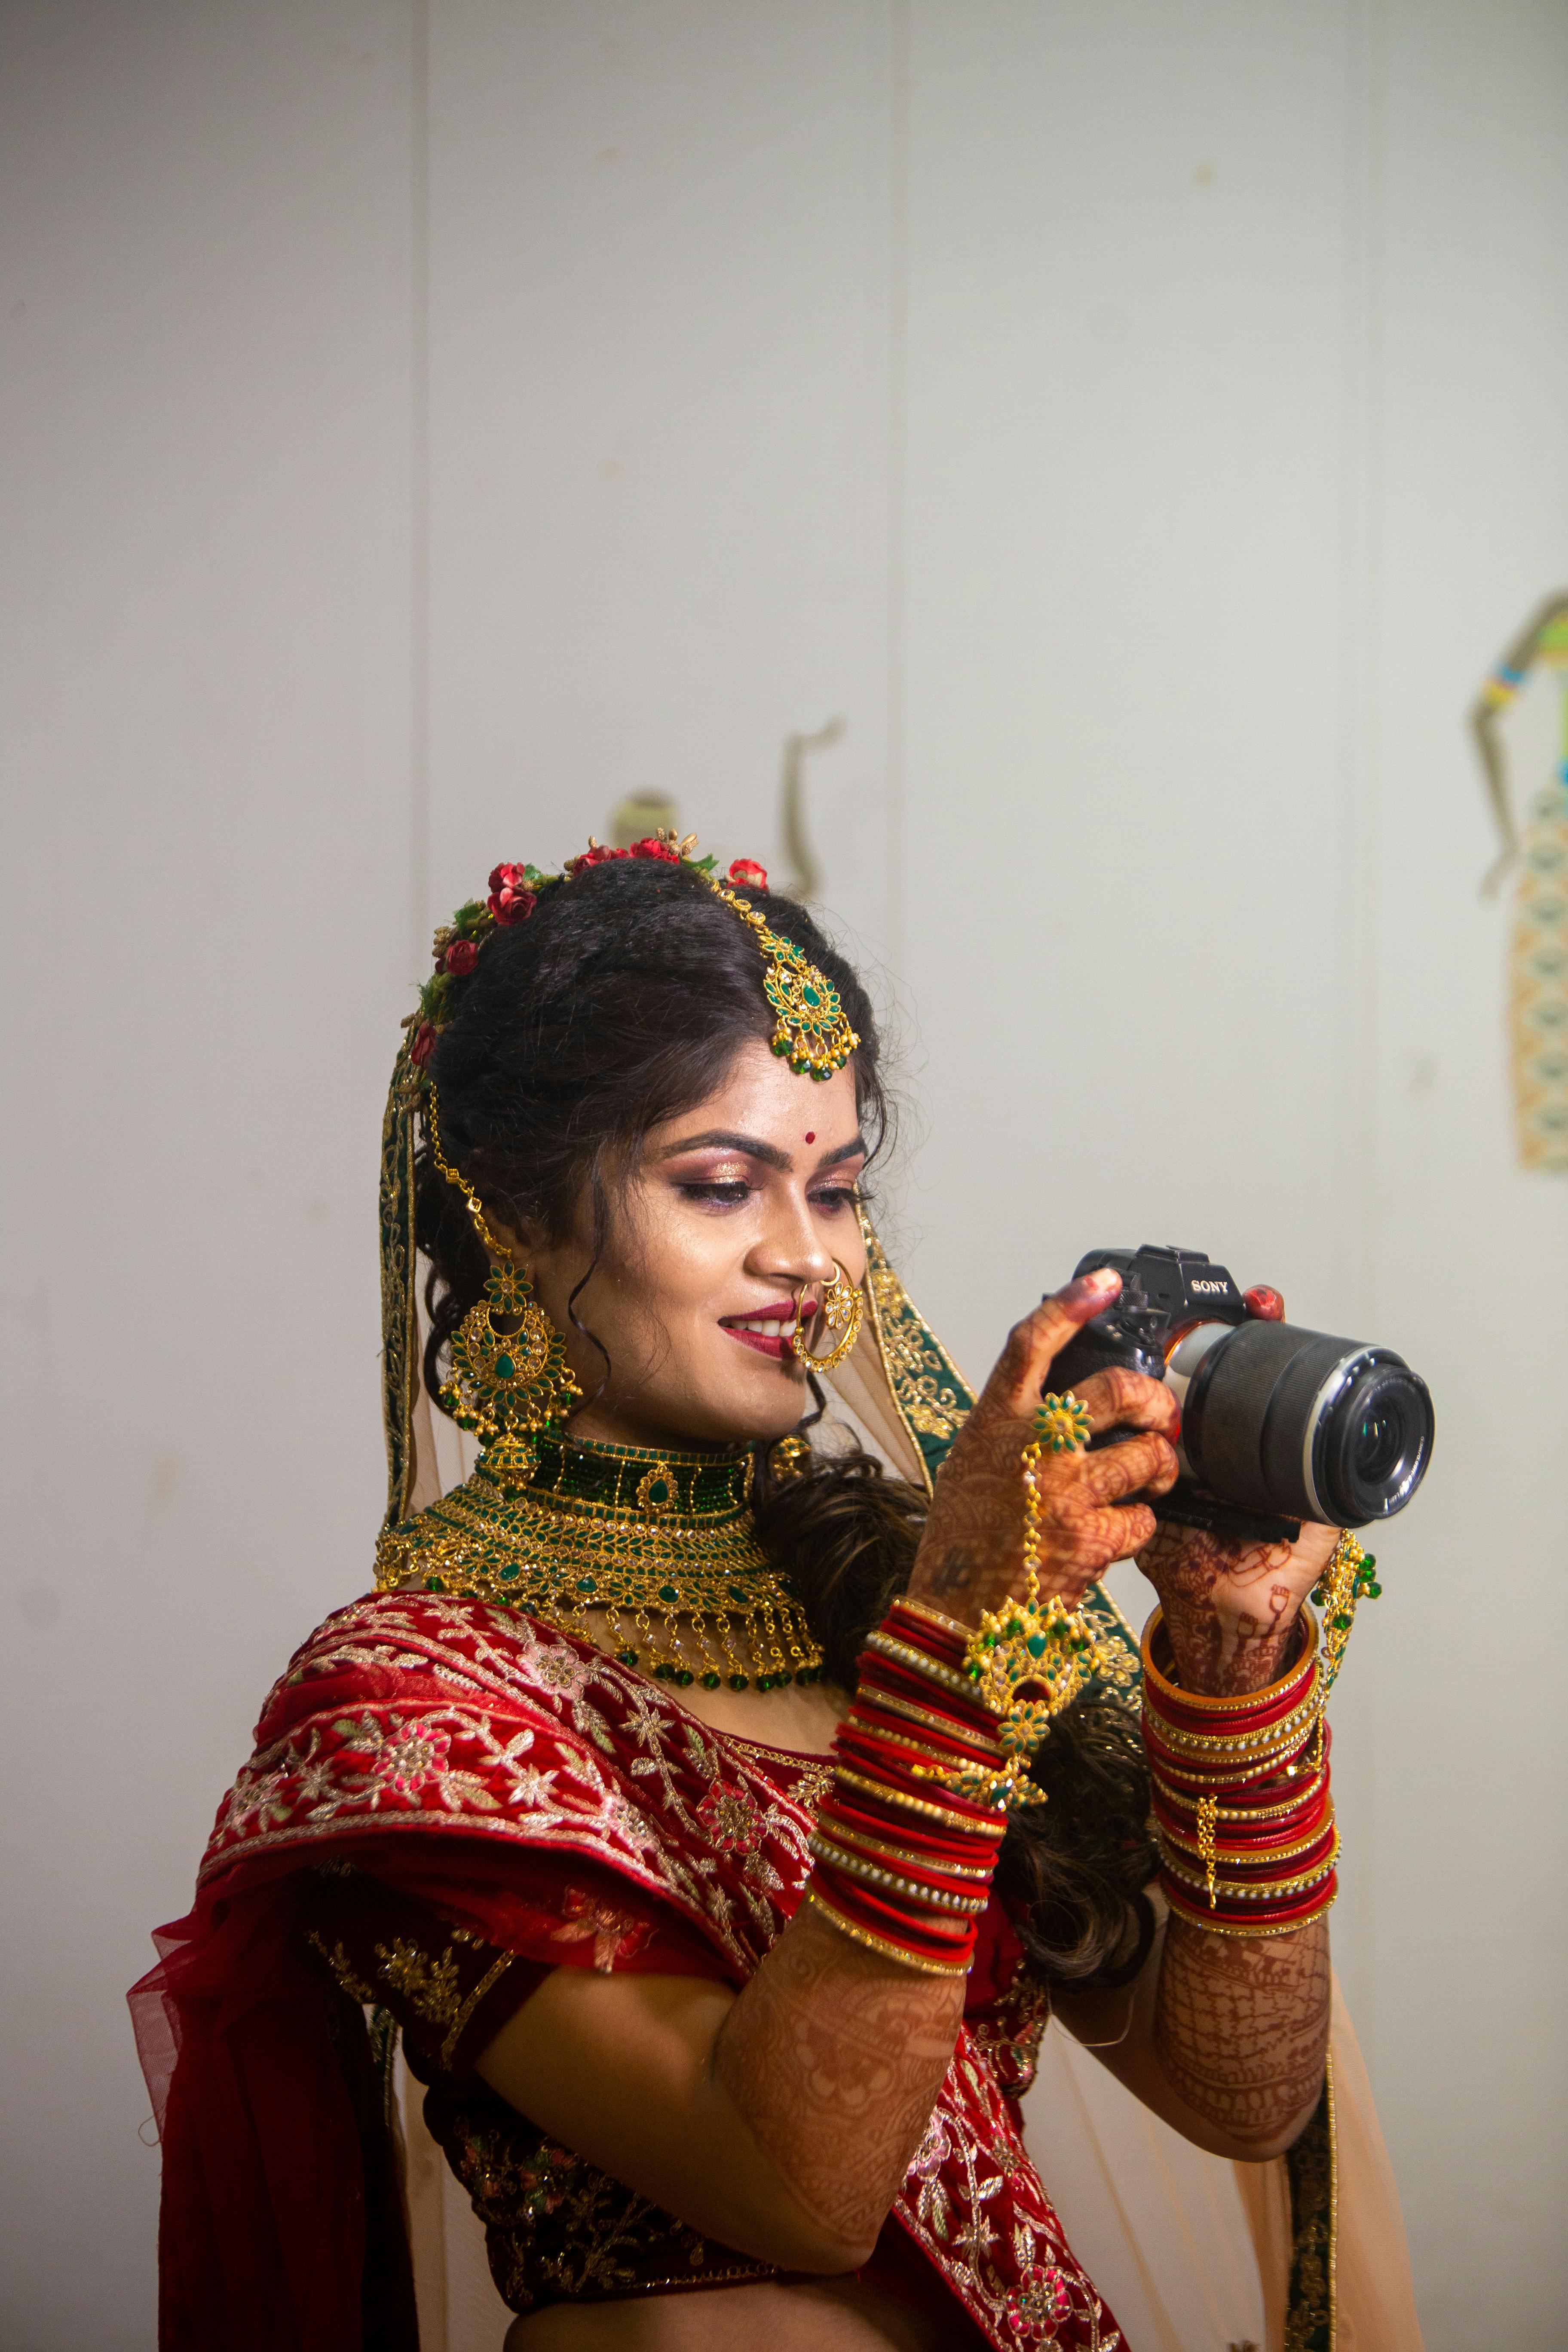 Pin by sj miln on gallari | Indian wedding bride, Bridal photography poses, Bengali  bridal makeup